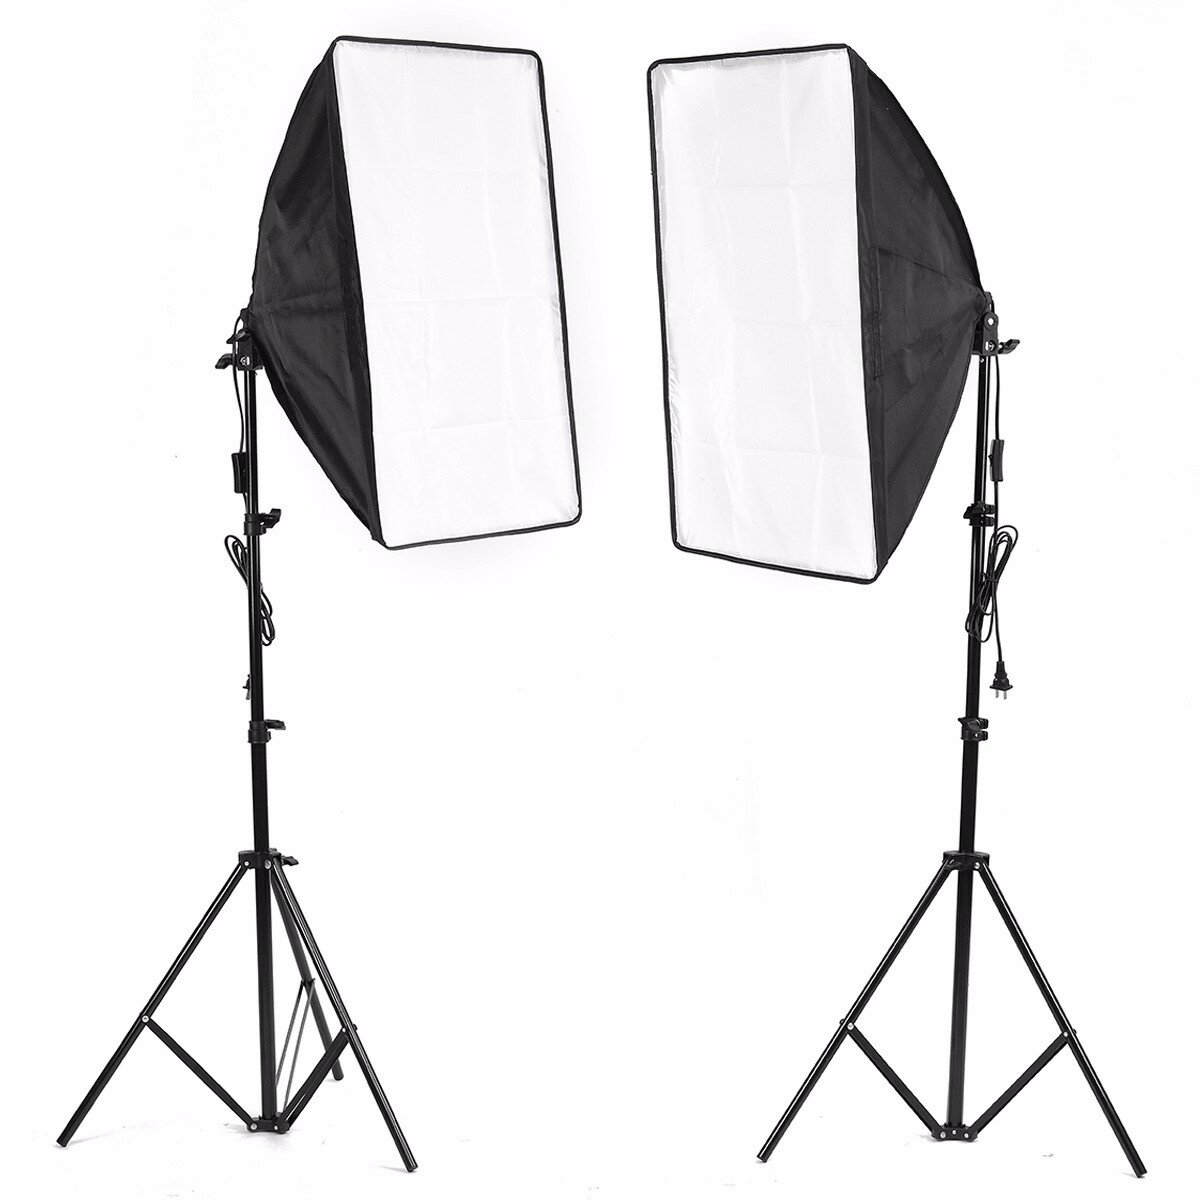 2x ARRI SANDBAG PHOTOGRAPHIC STUDIO LIGHTING STANDS & FLASH HEAD SOFT BOX BOXES 